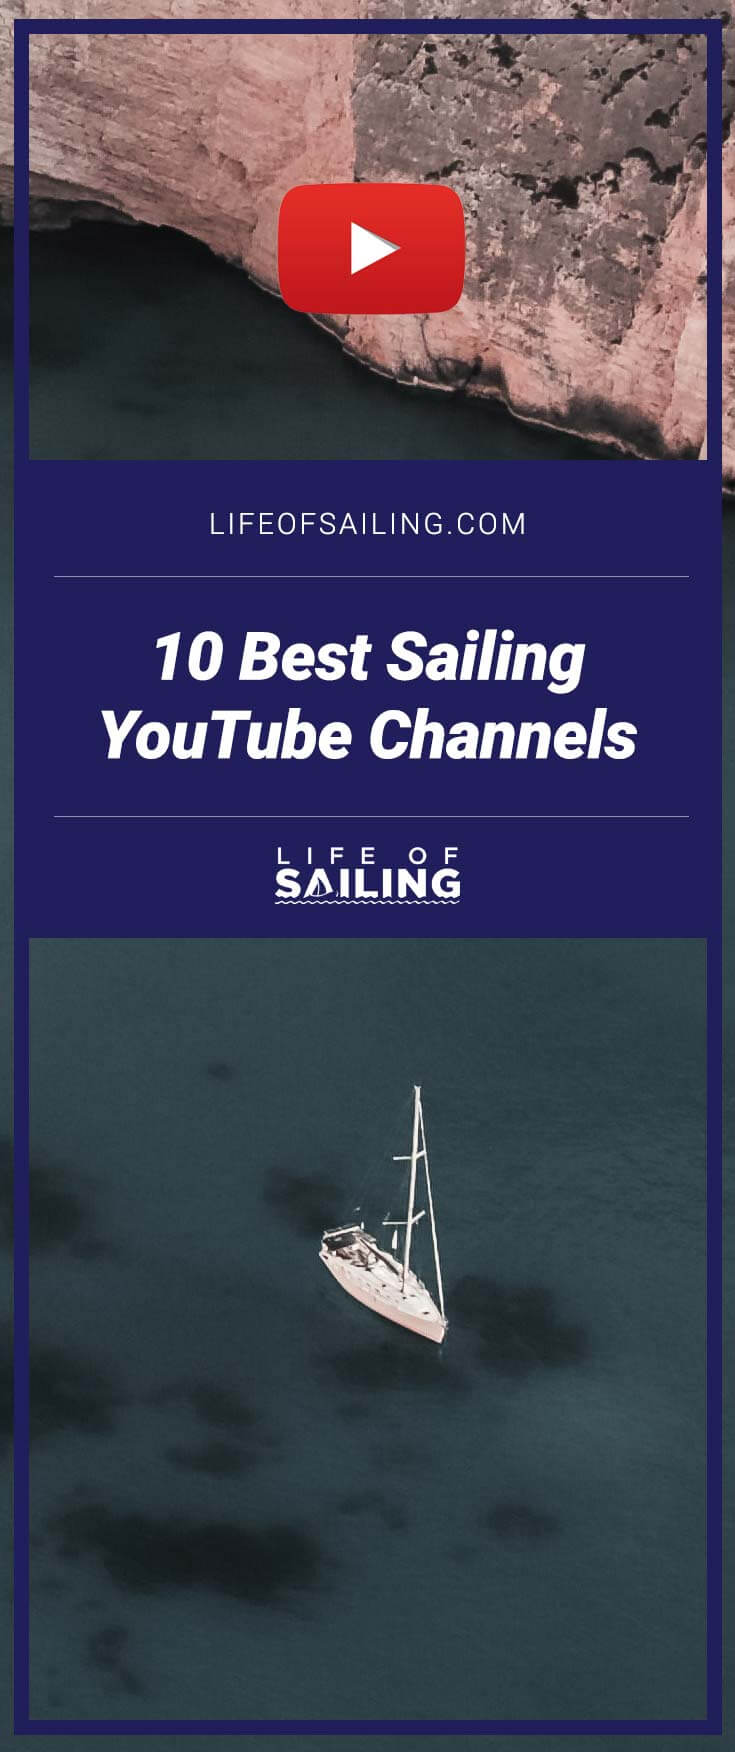 andrew dedert share free range sailing youtube photos